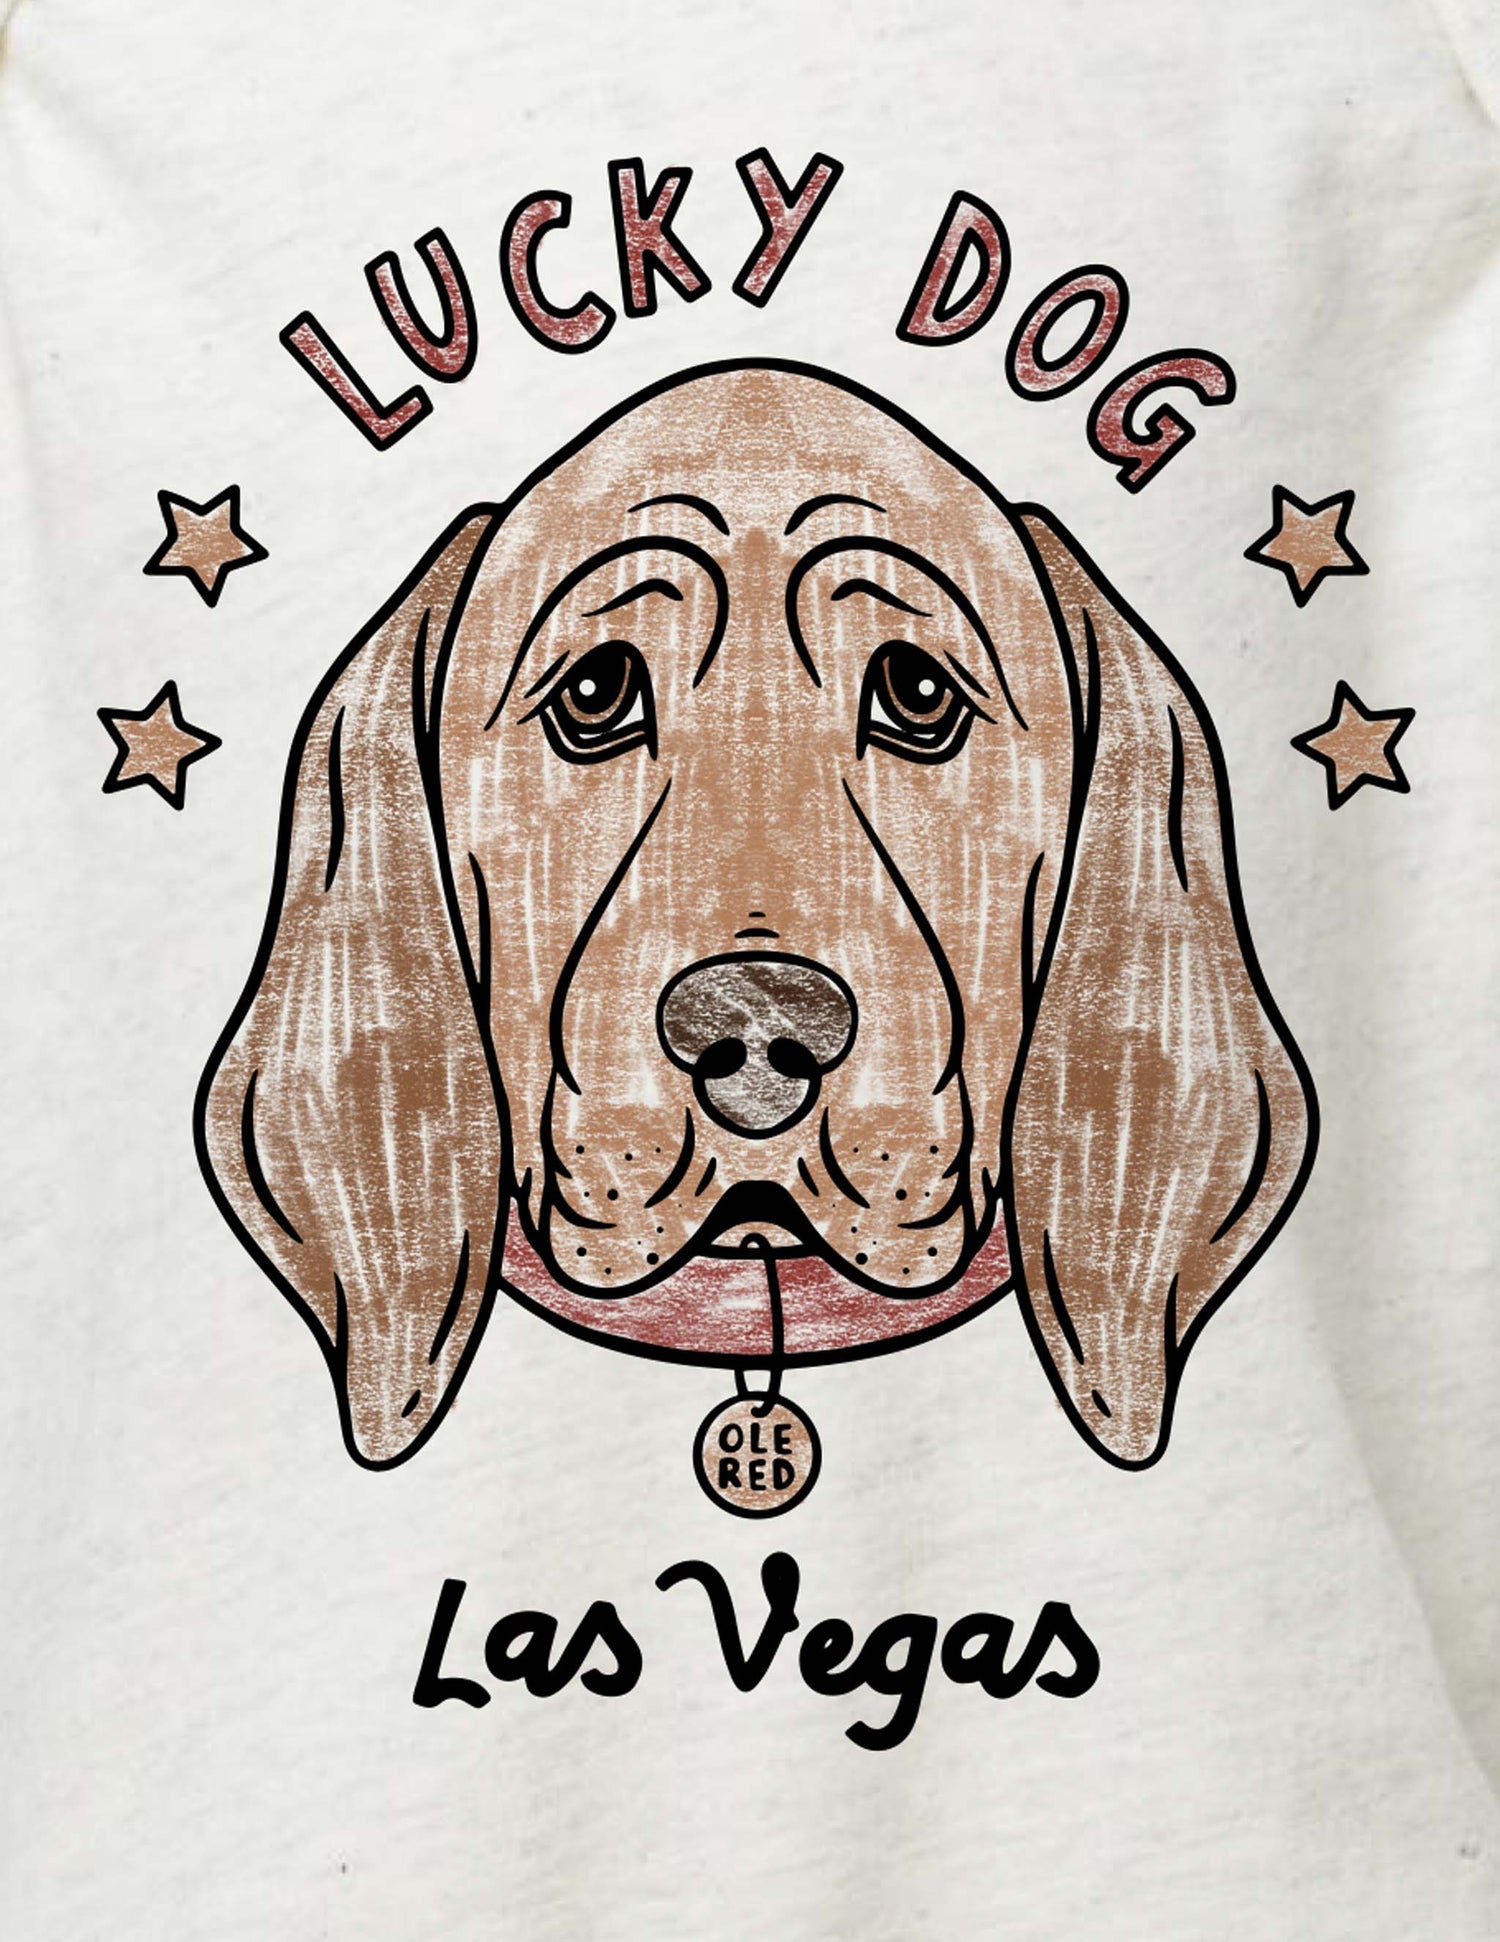 Ole Red Vegas Lucky Dog Onesie